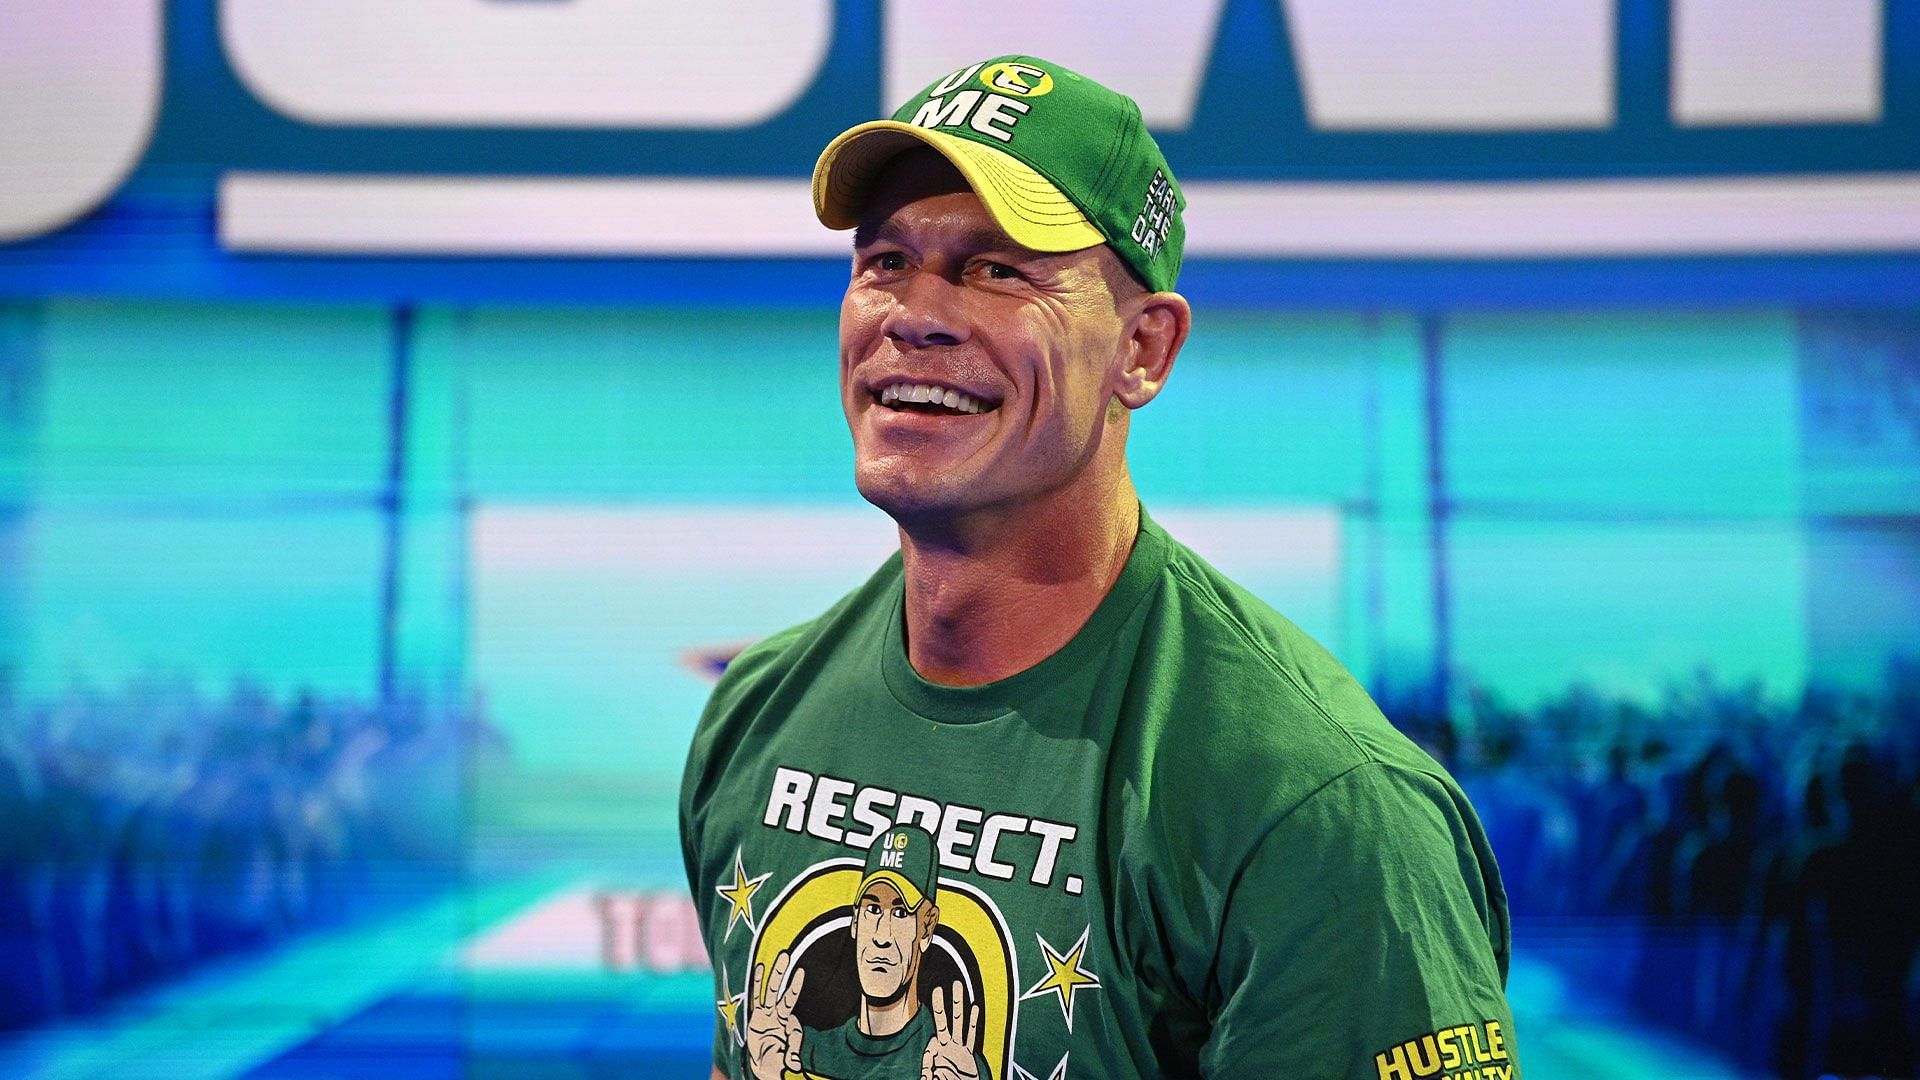 John Cena made his big return on Monday Night Raw